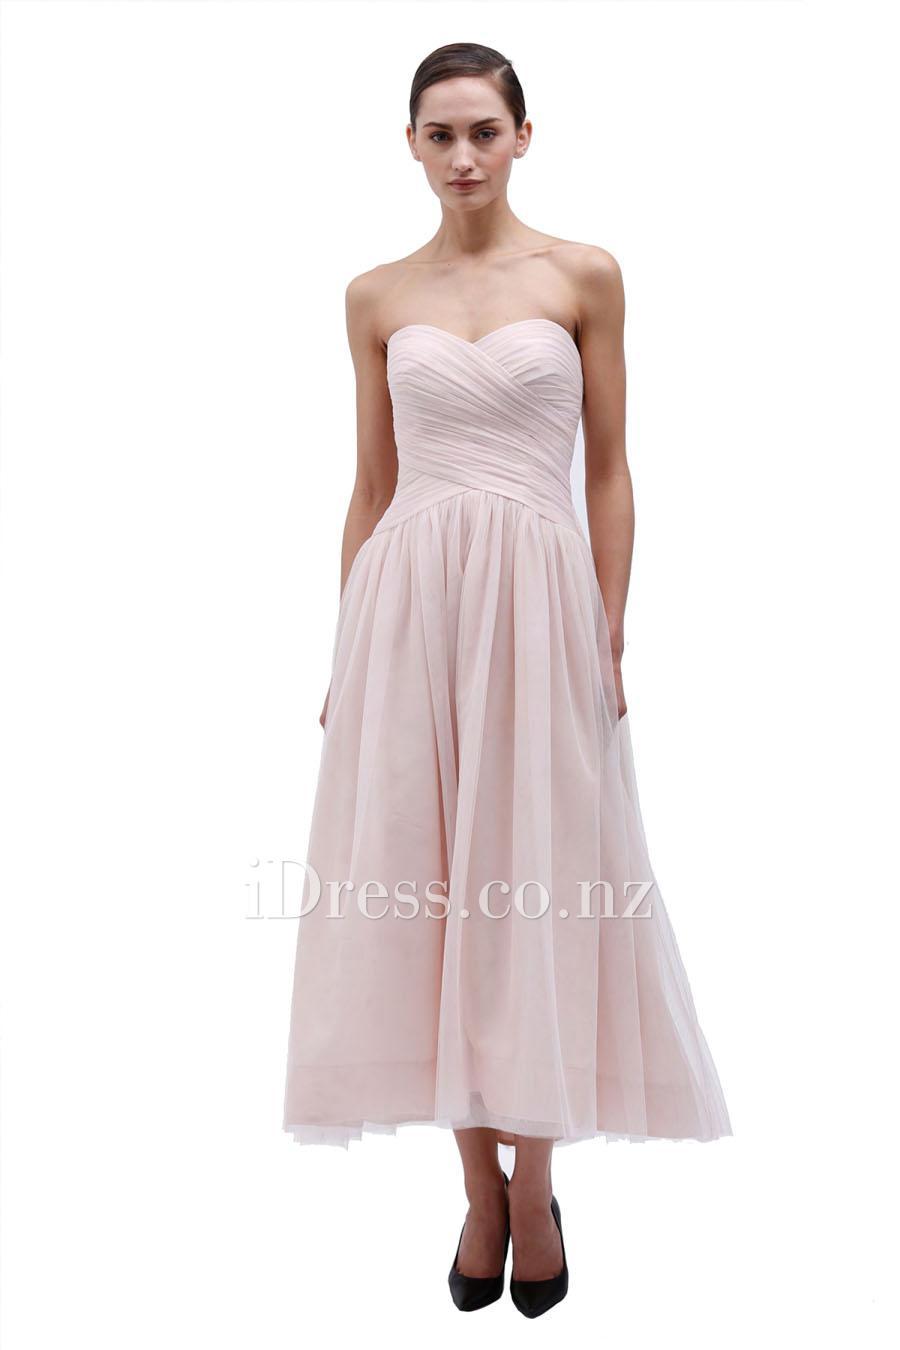 Wedding - Strapless Blush Tea Length A-line Sweetheart Bridesmaid Dress